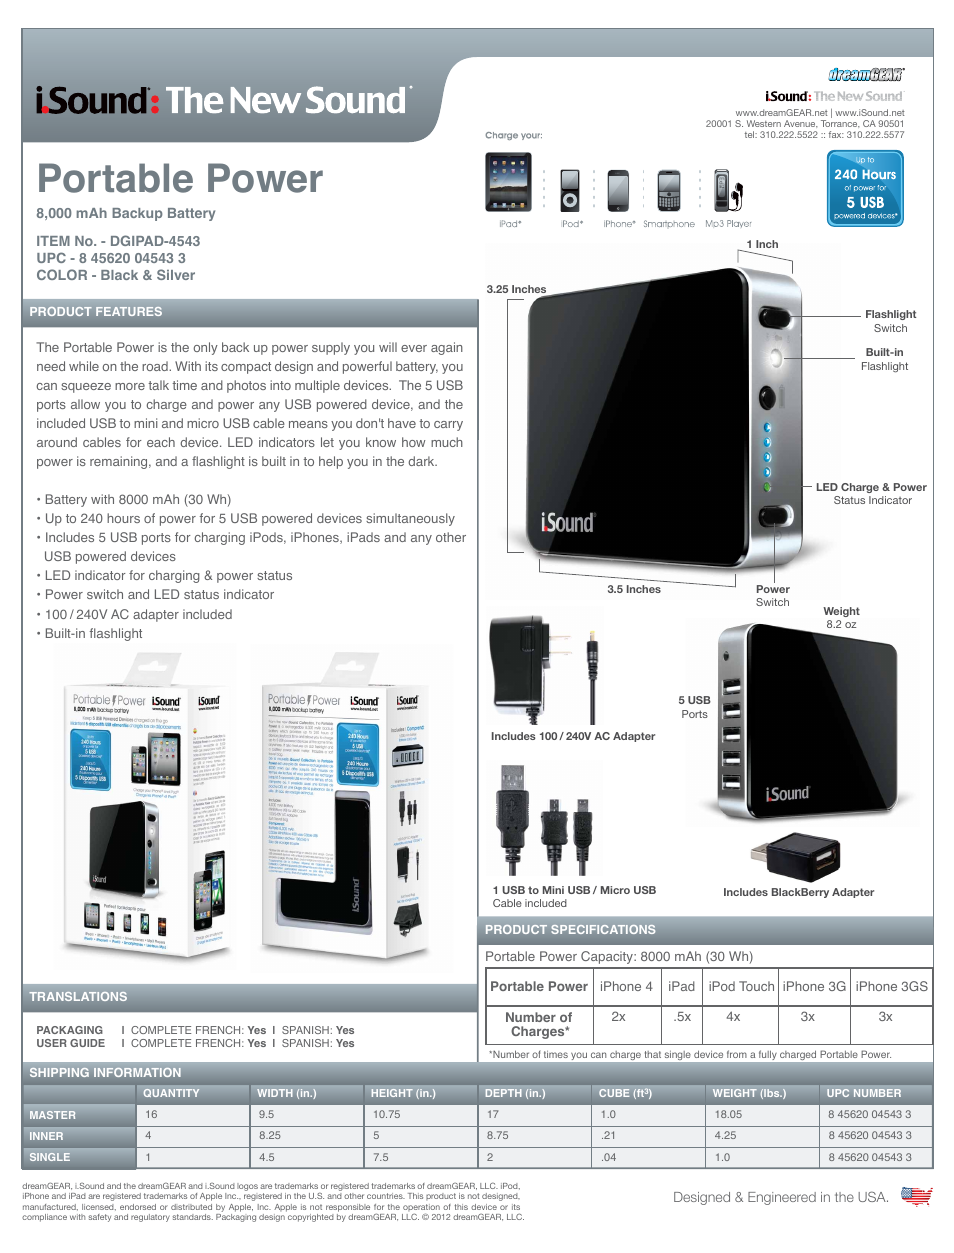 Portable Power - 8000 mAh - Sell Sheet